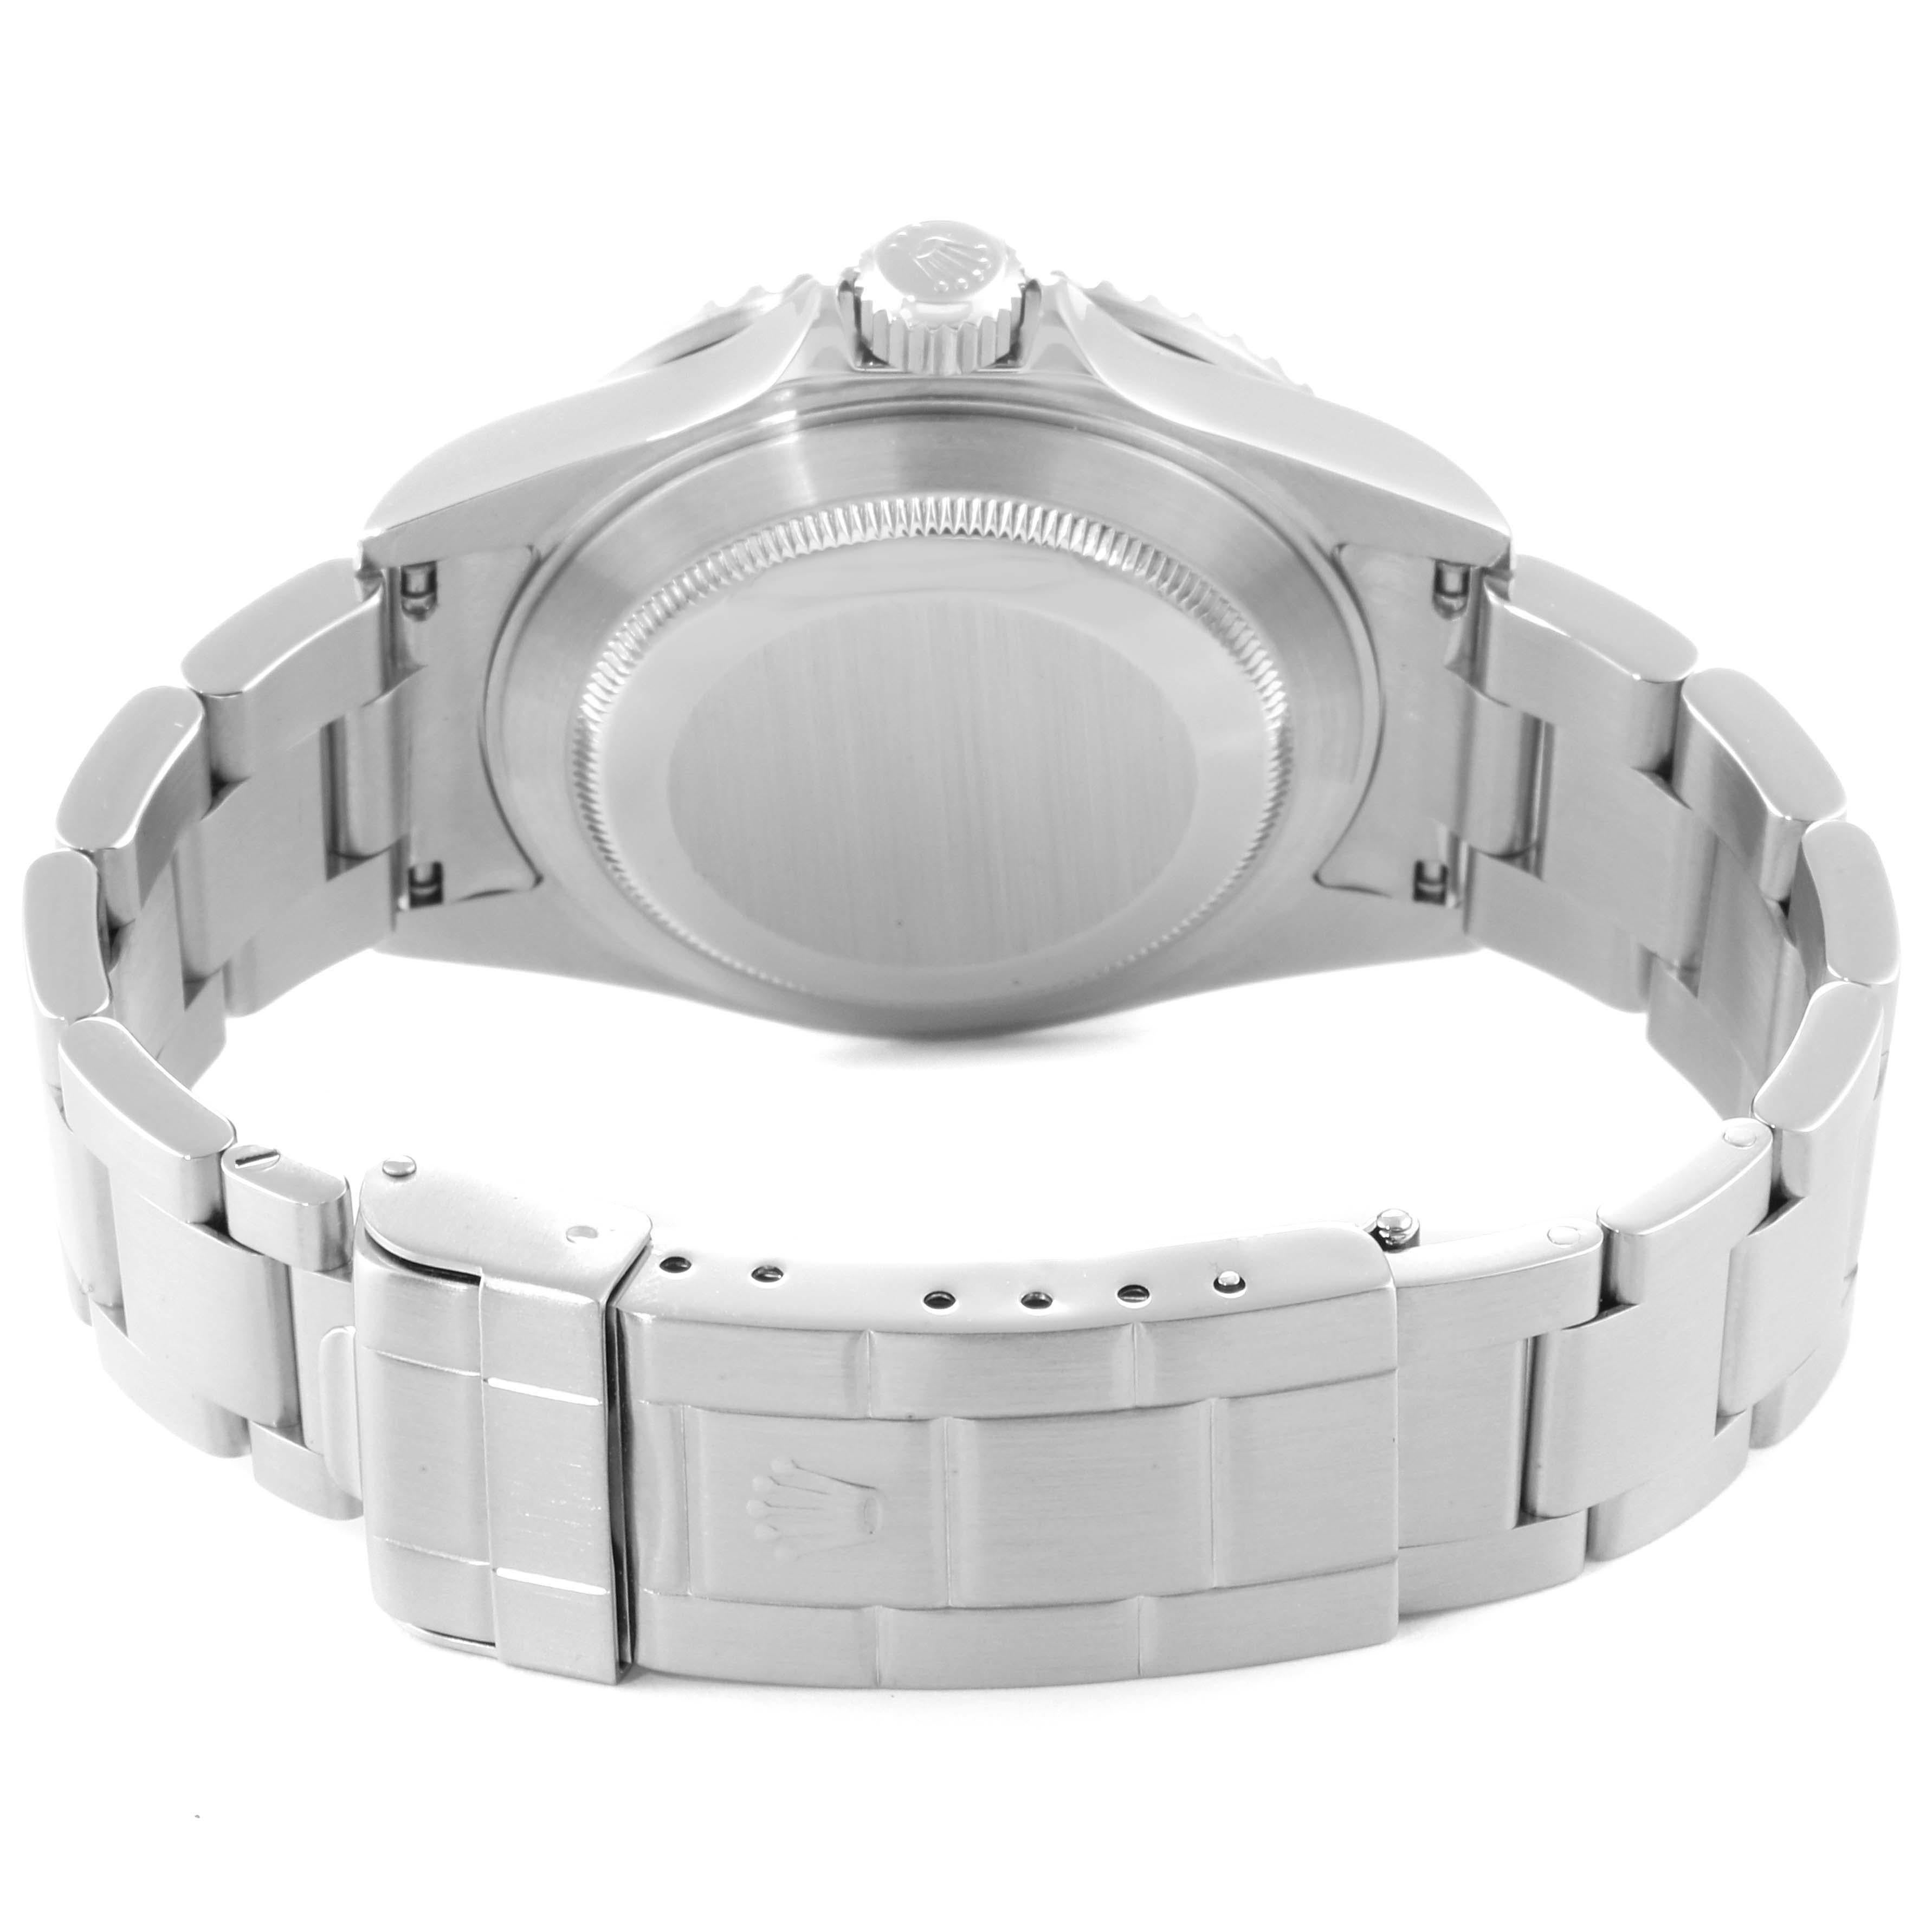 Rolex Submariner Black Dial Steel Men's Watch 16610 Box For Sale 6